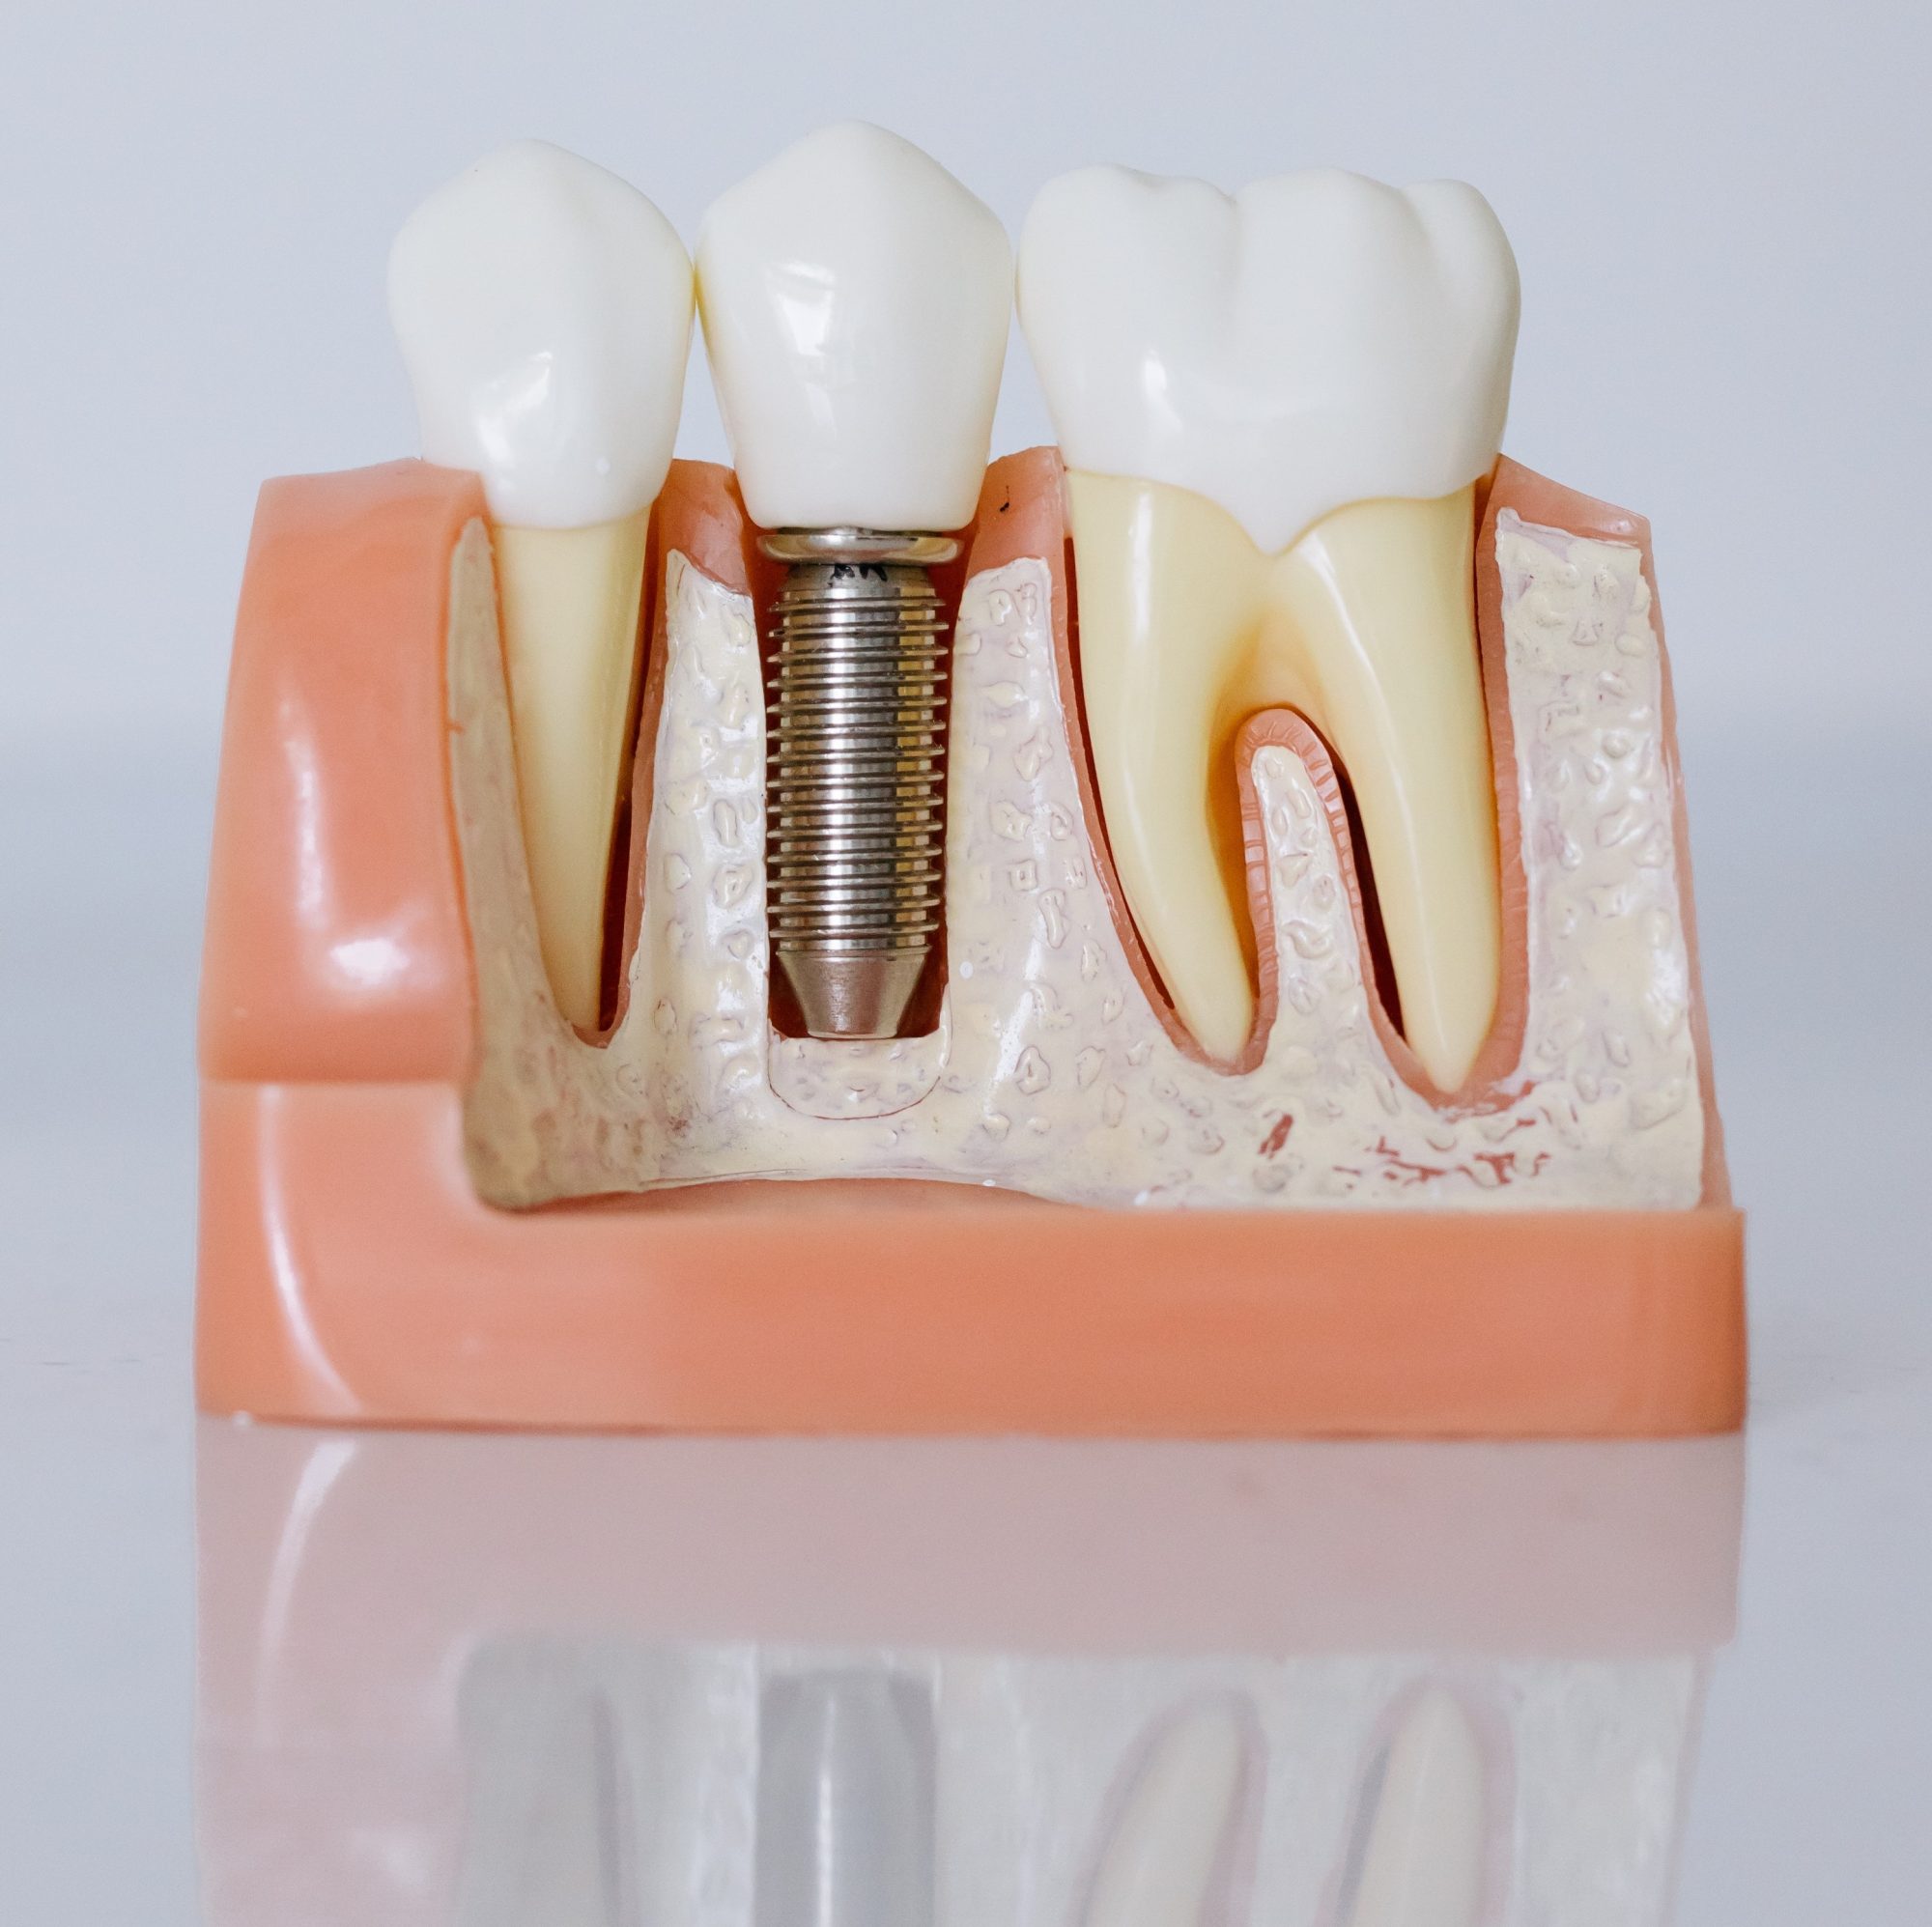 Dantų implantacija